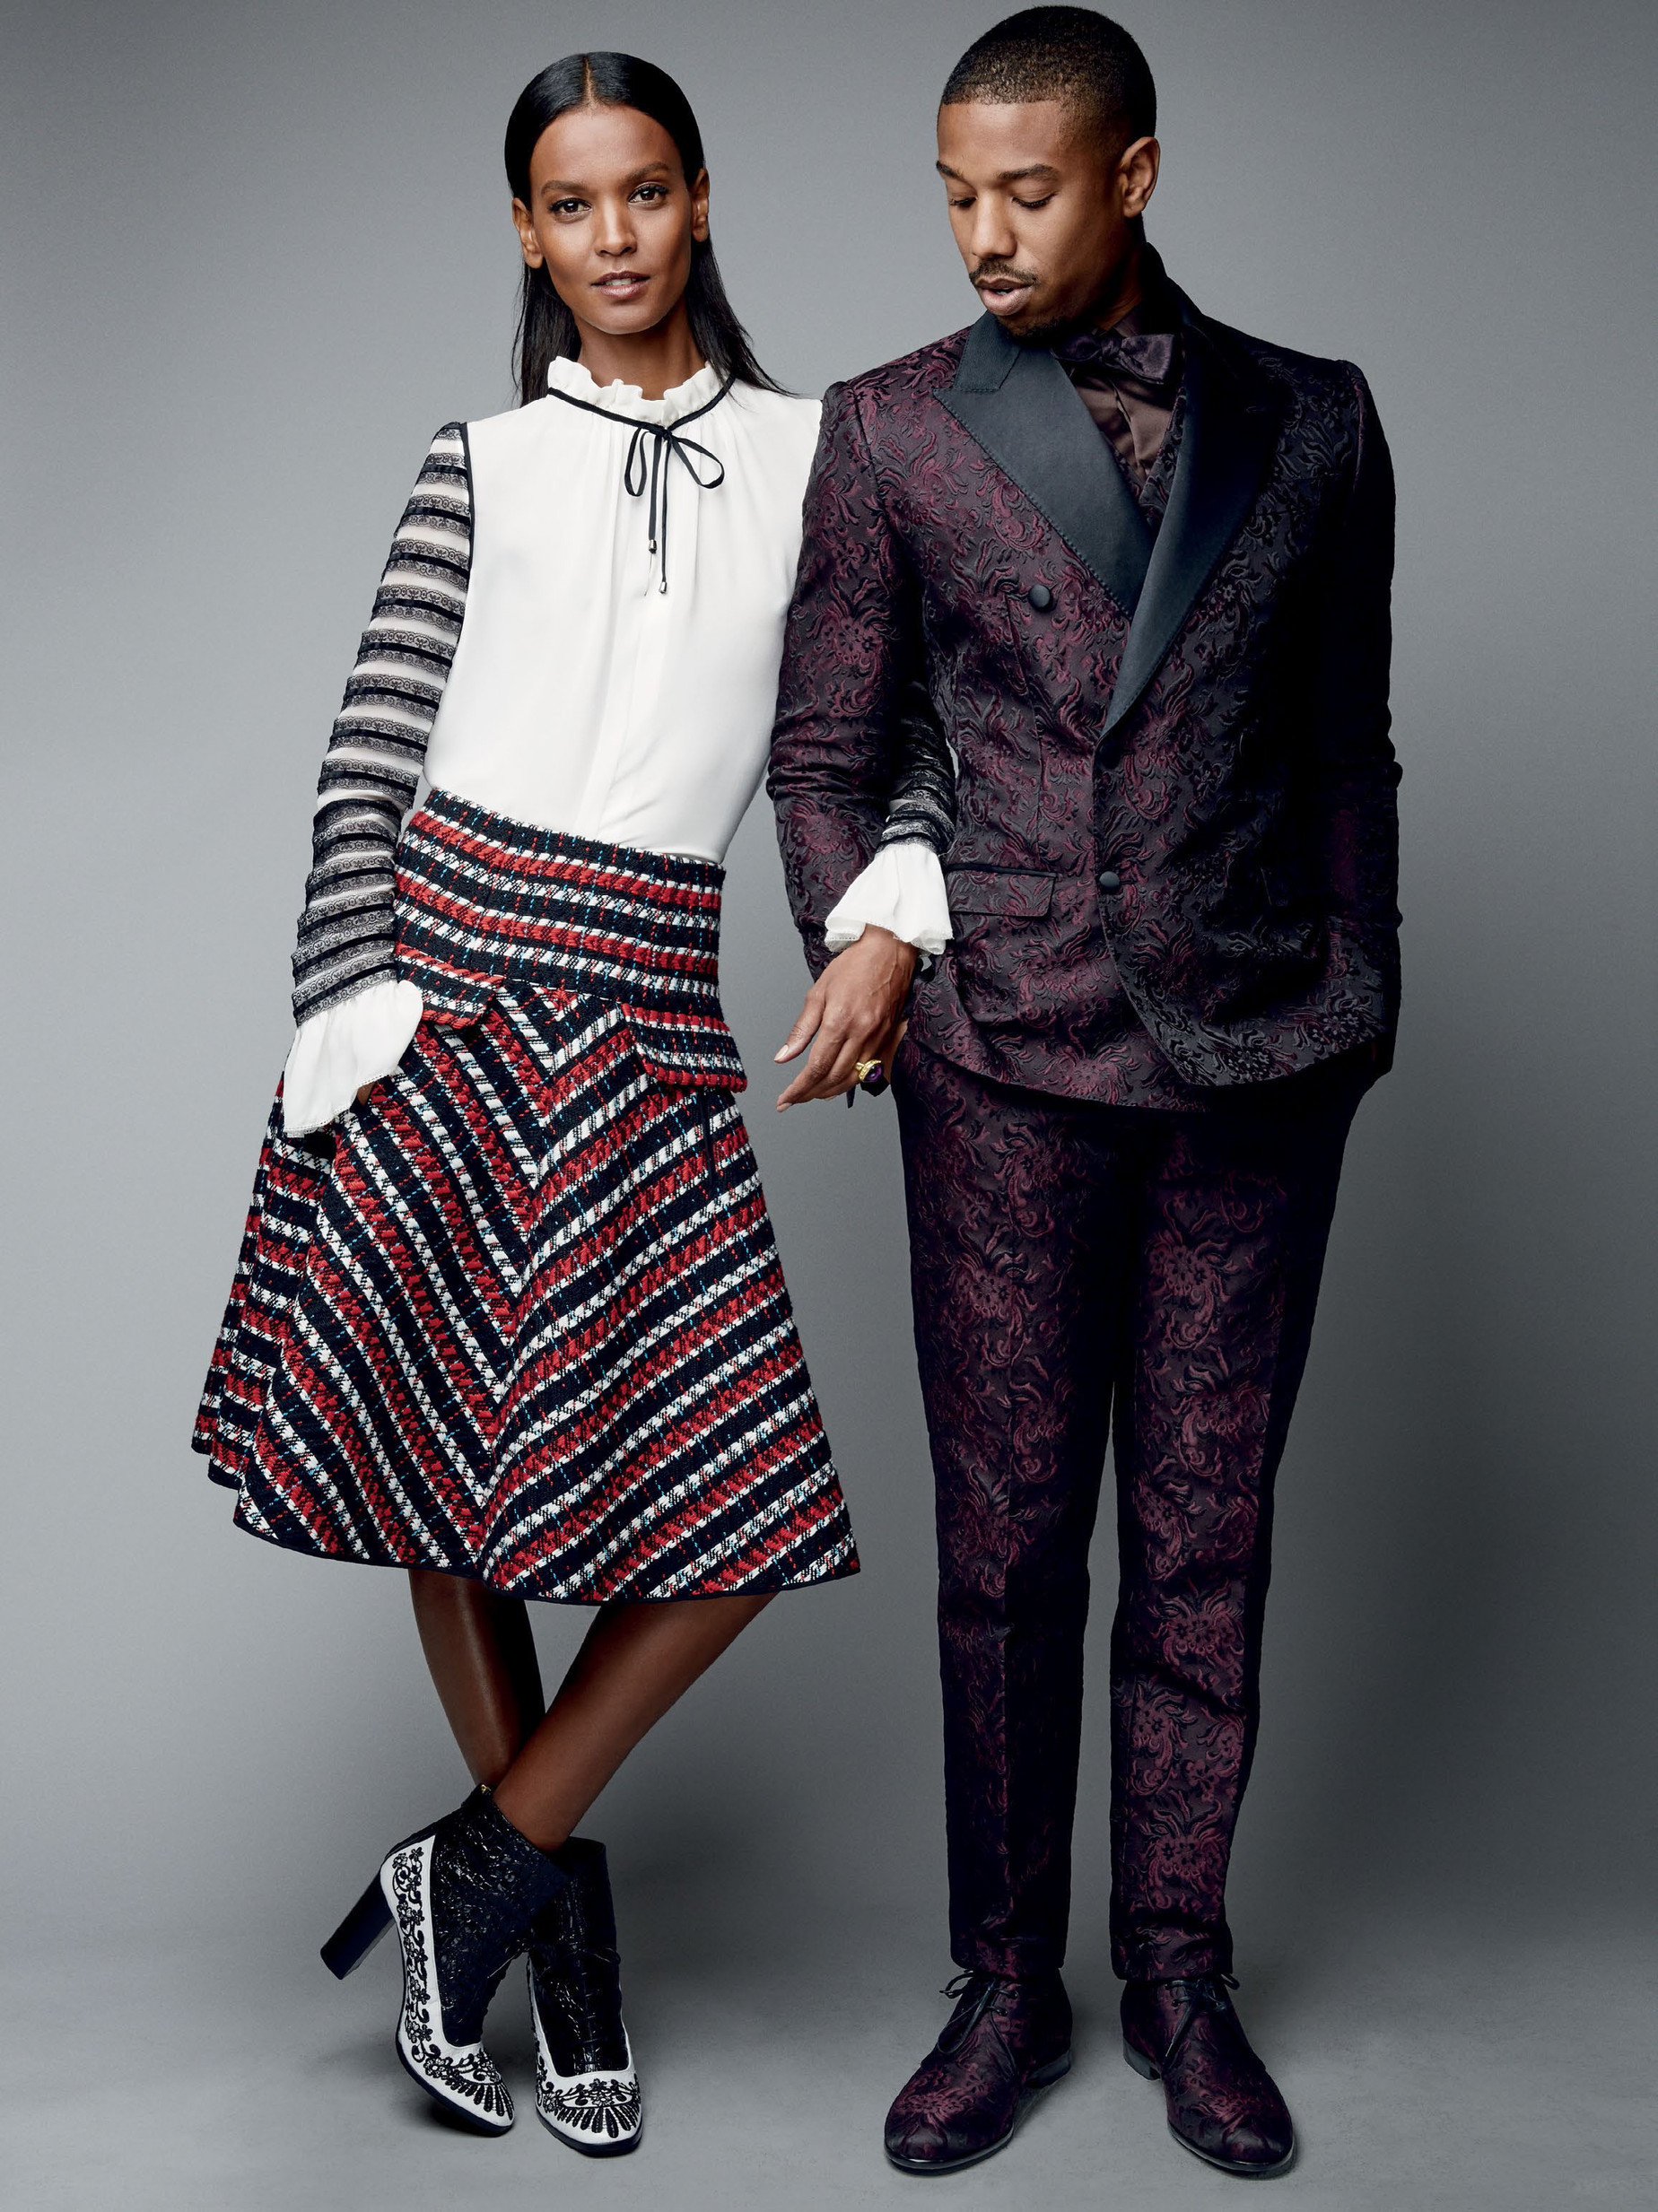 Michael B Jordan Goes Dandy for Vogue Photo Shoot – The Fashionisto